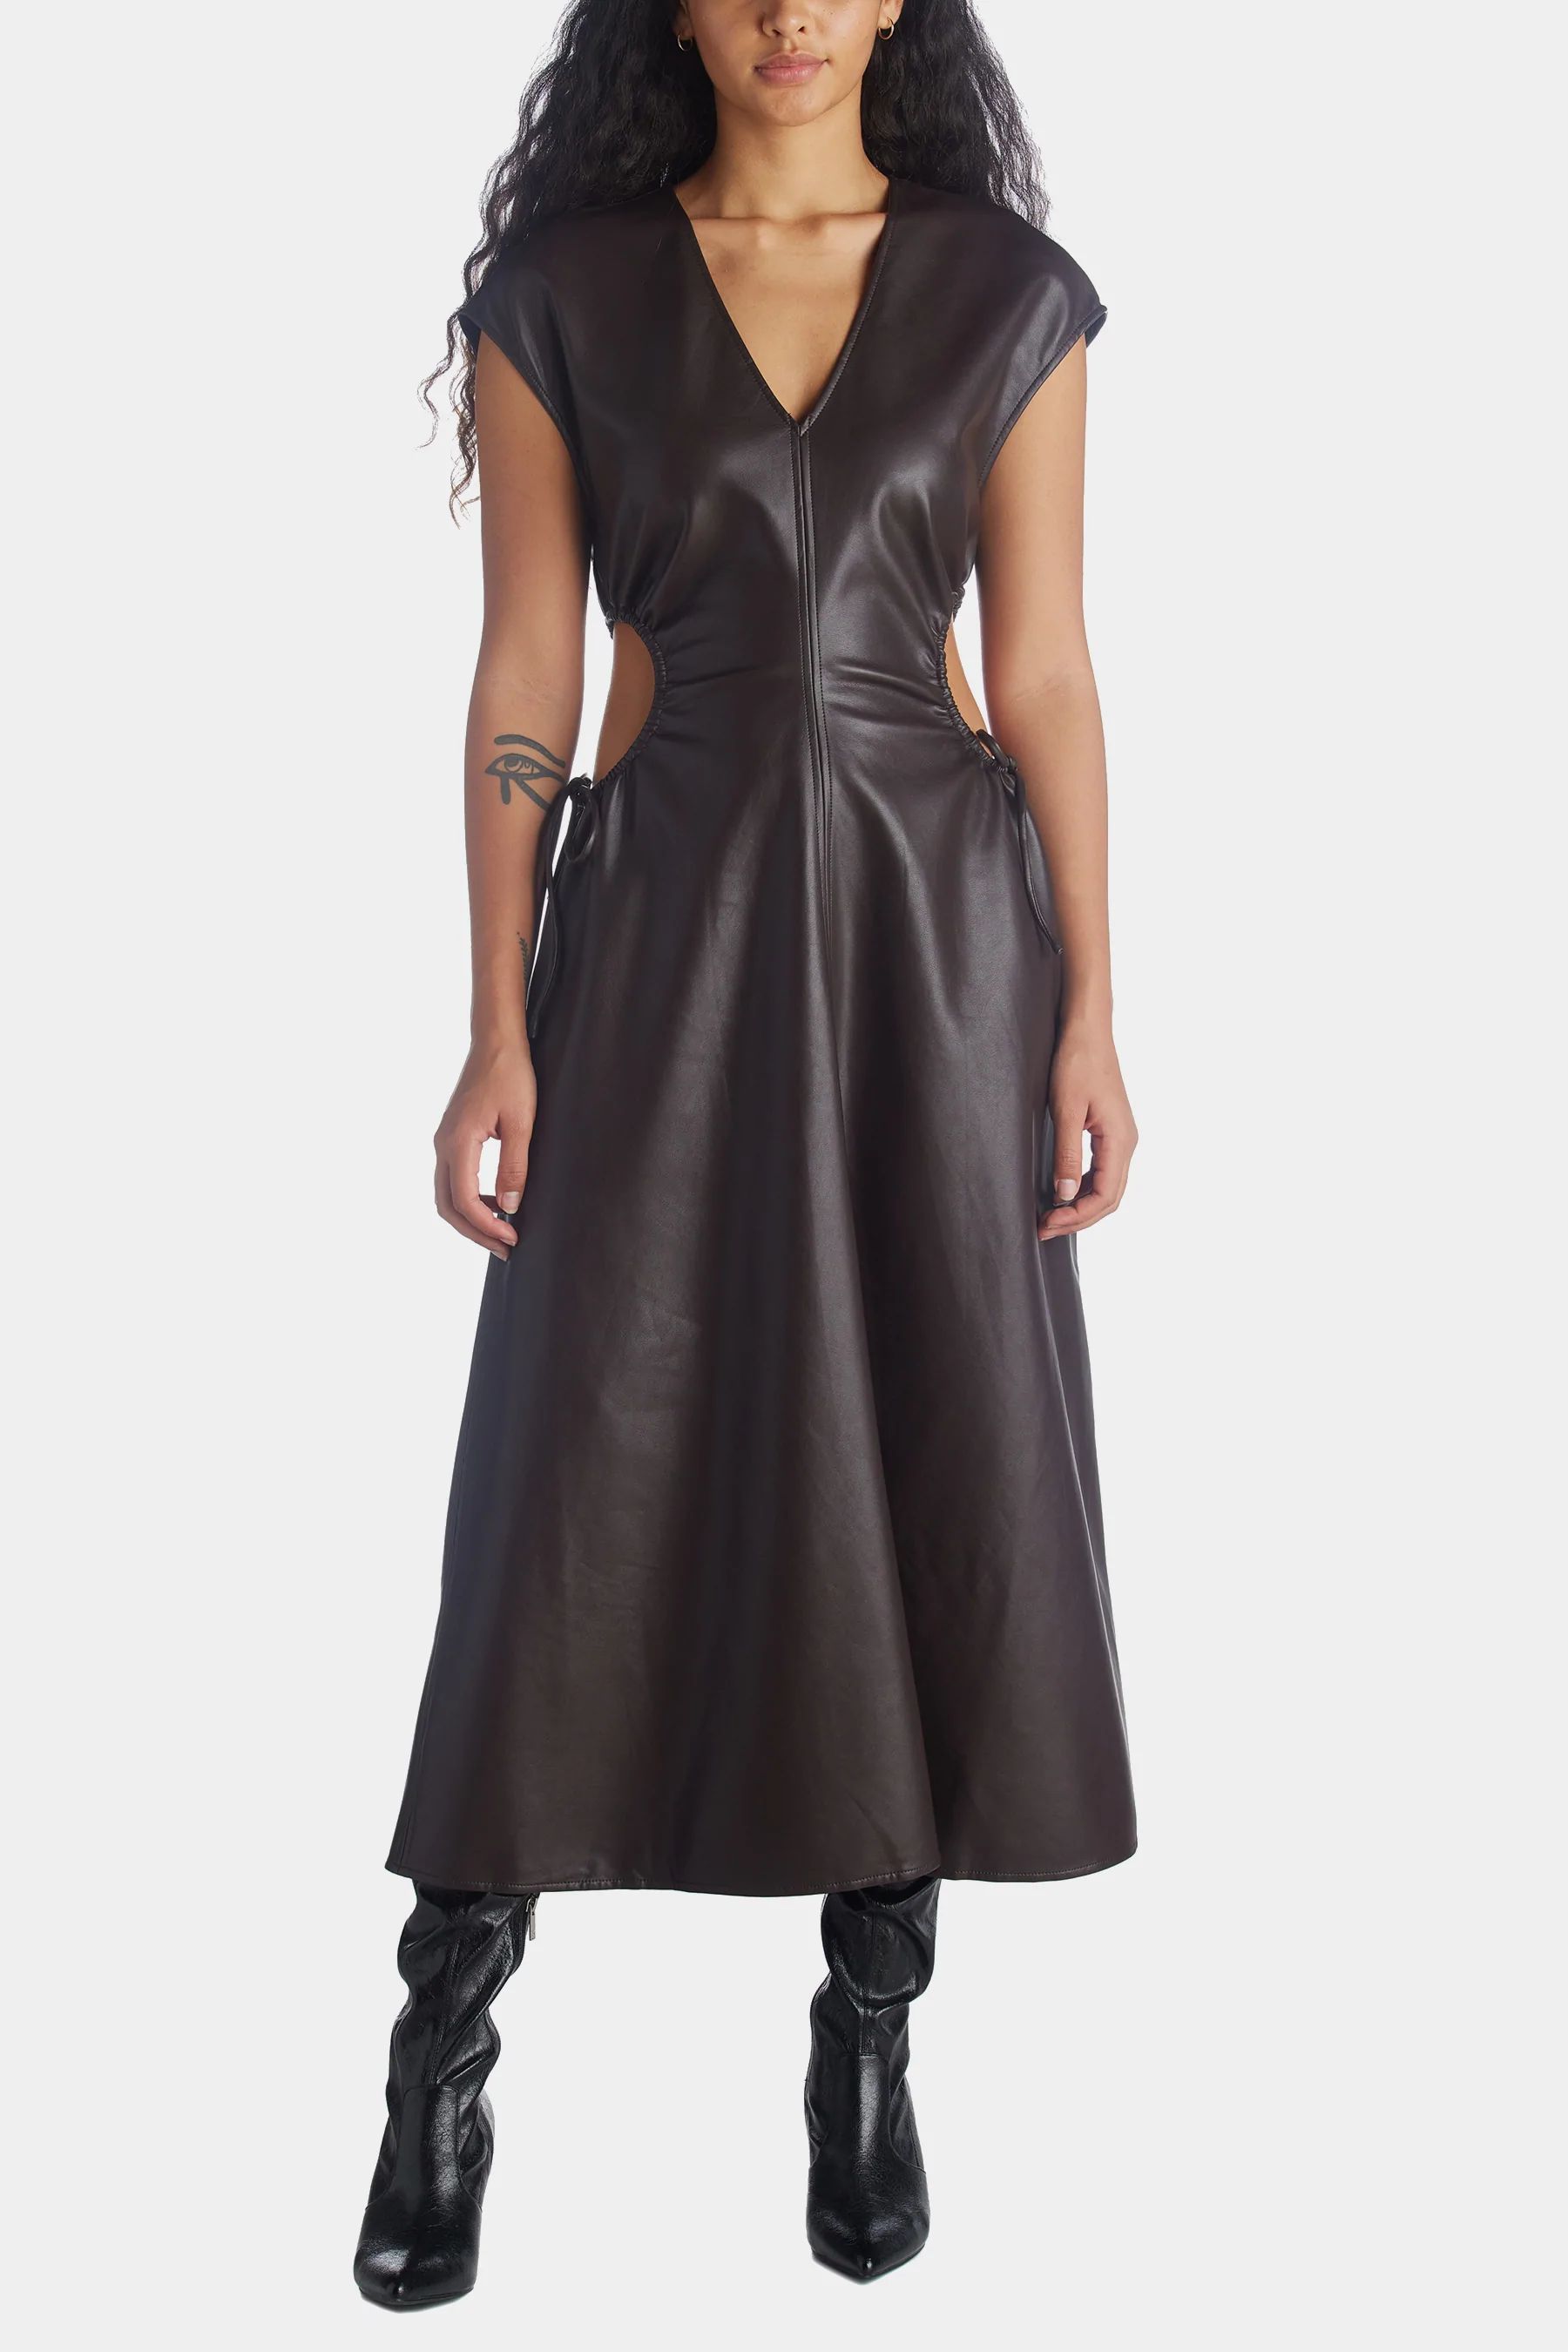 ASTR Women's Miranda Dress in Dark Brown Small Lord & Taylor | Lord & Taylor